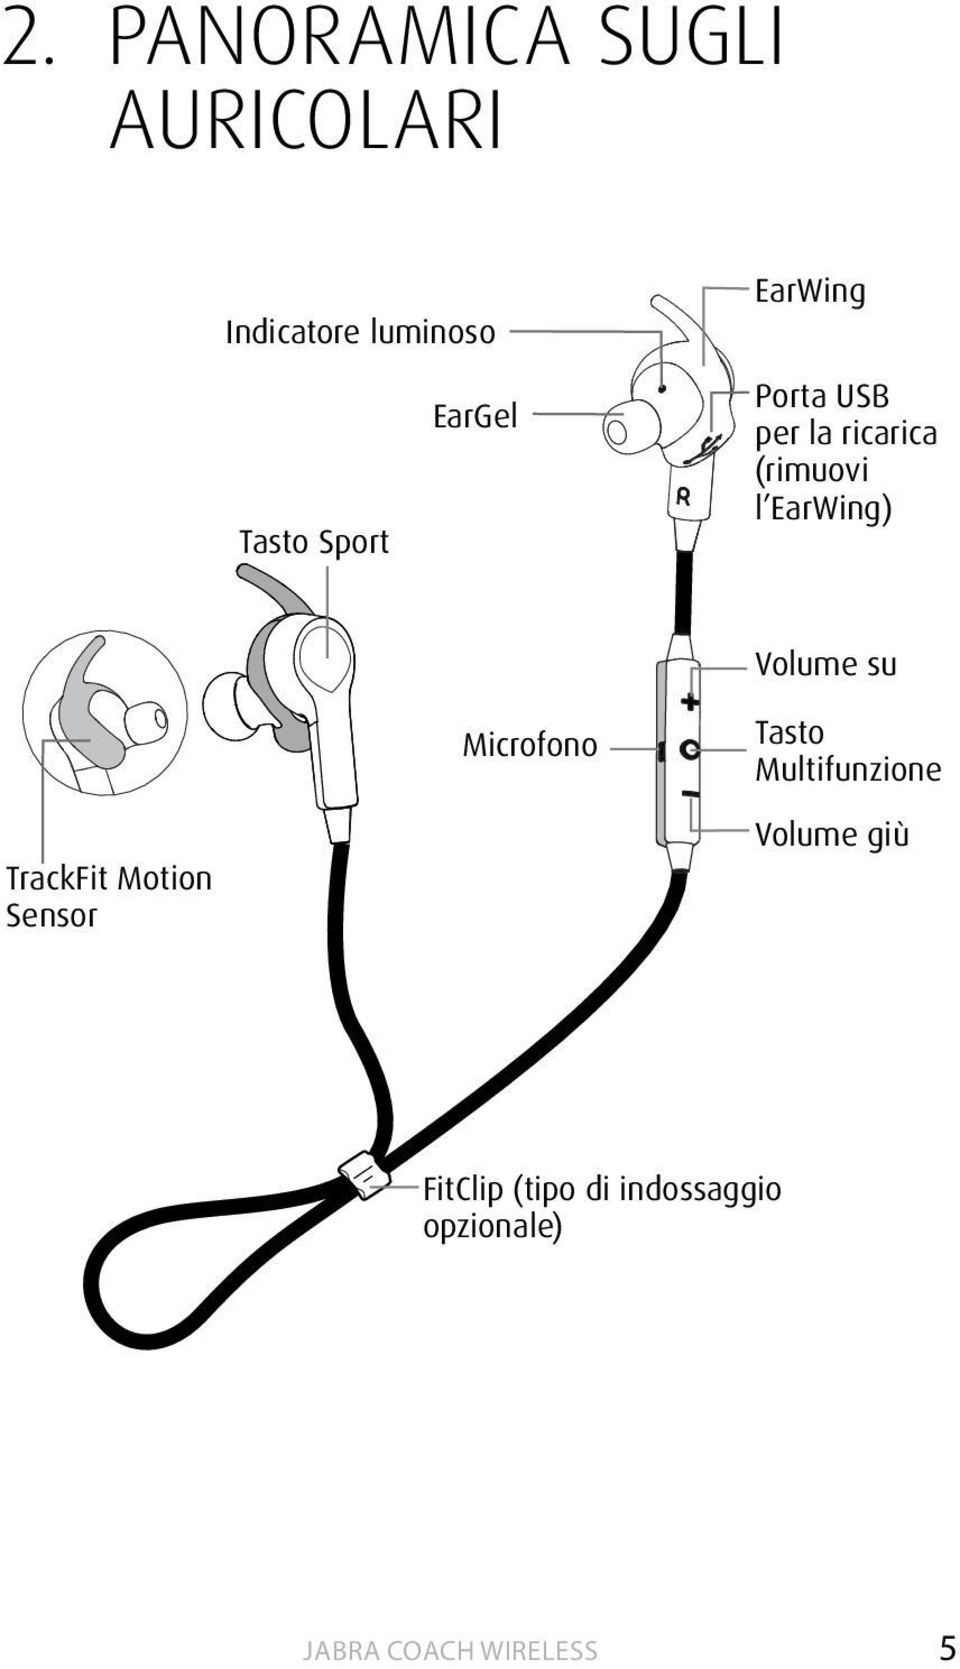 EarWing) Volume su TrackFit Motion Sensor Microfono Tasto